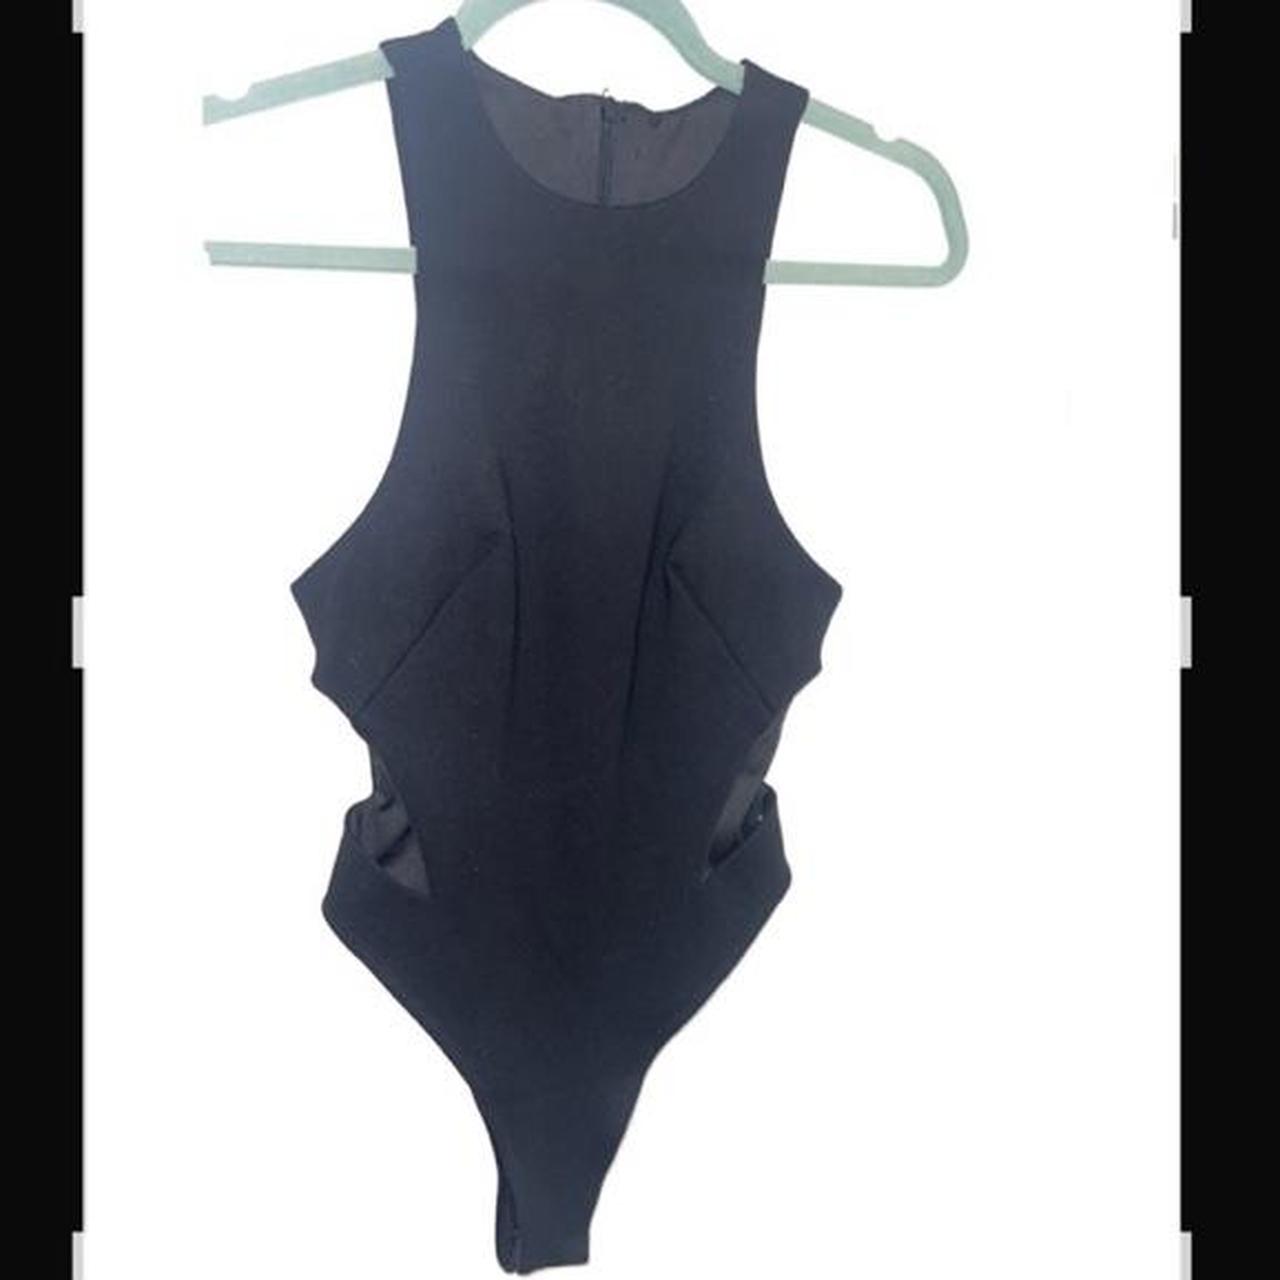 Product Image 3 - Atoir Bianca bodysuit

Size small fits